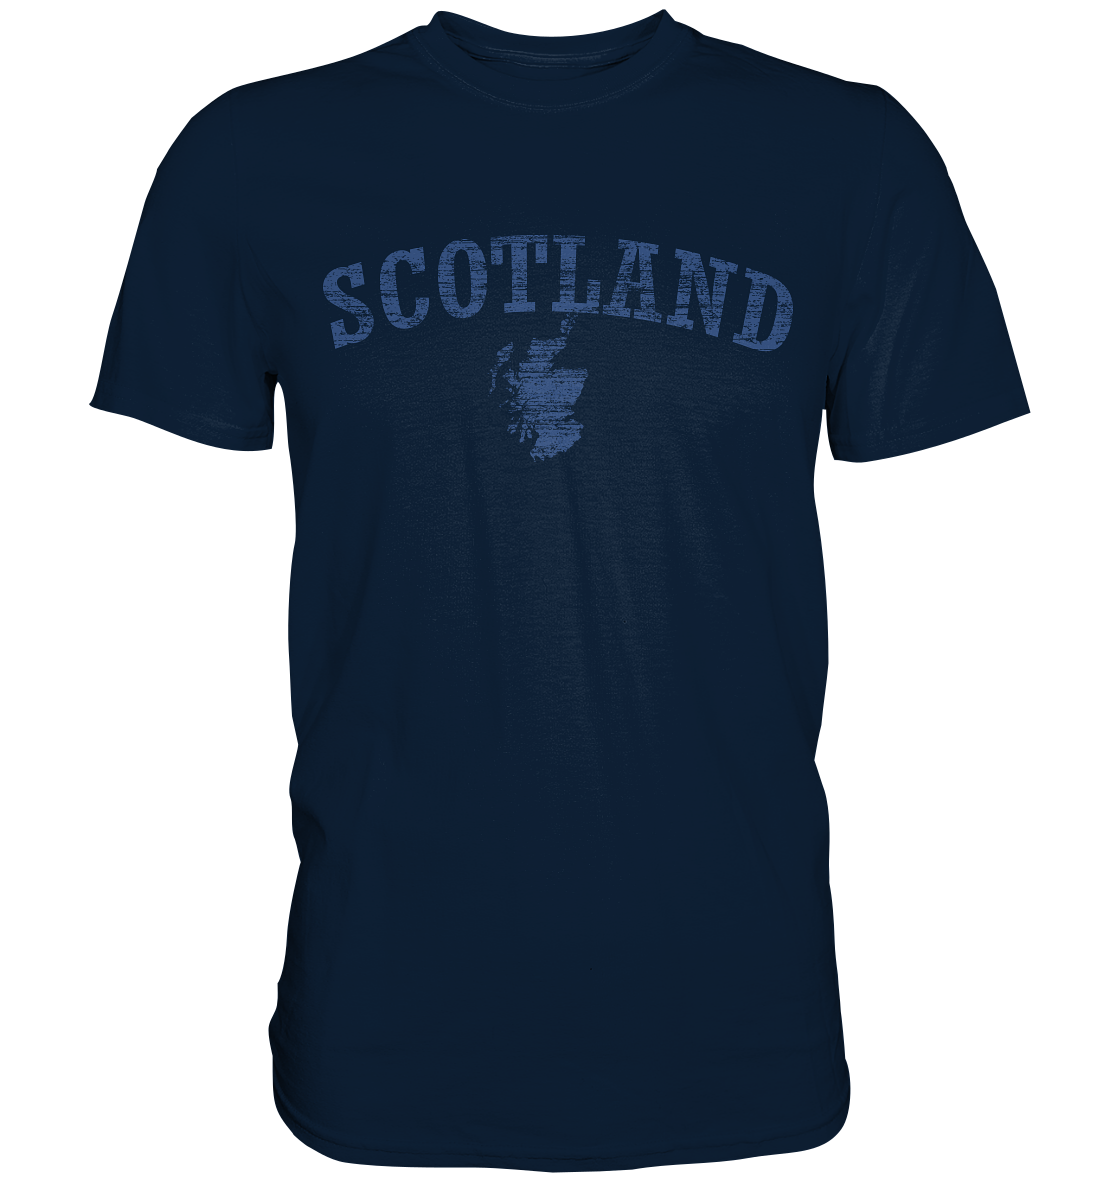 Scotland "Landscape" - Premium Shirt